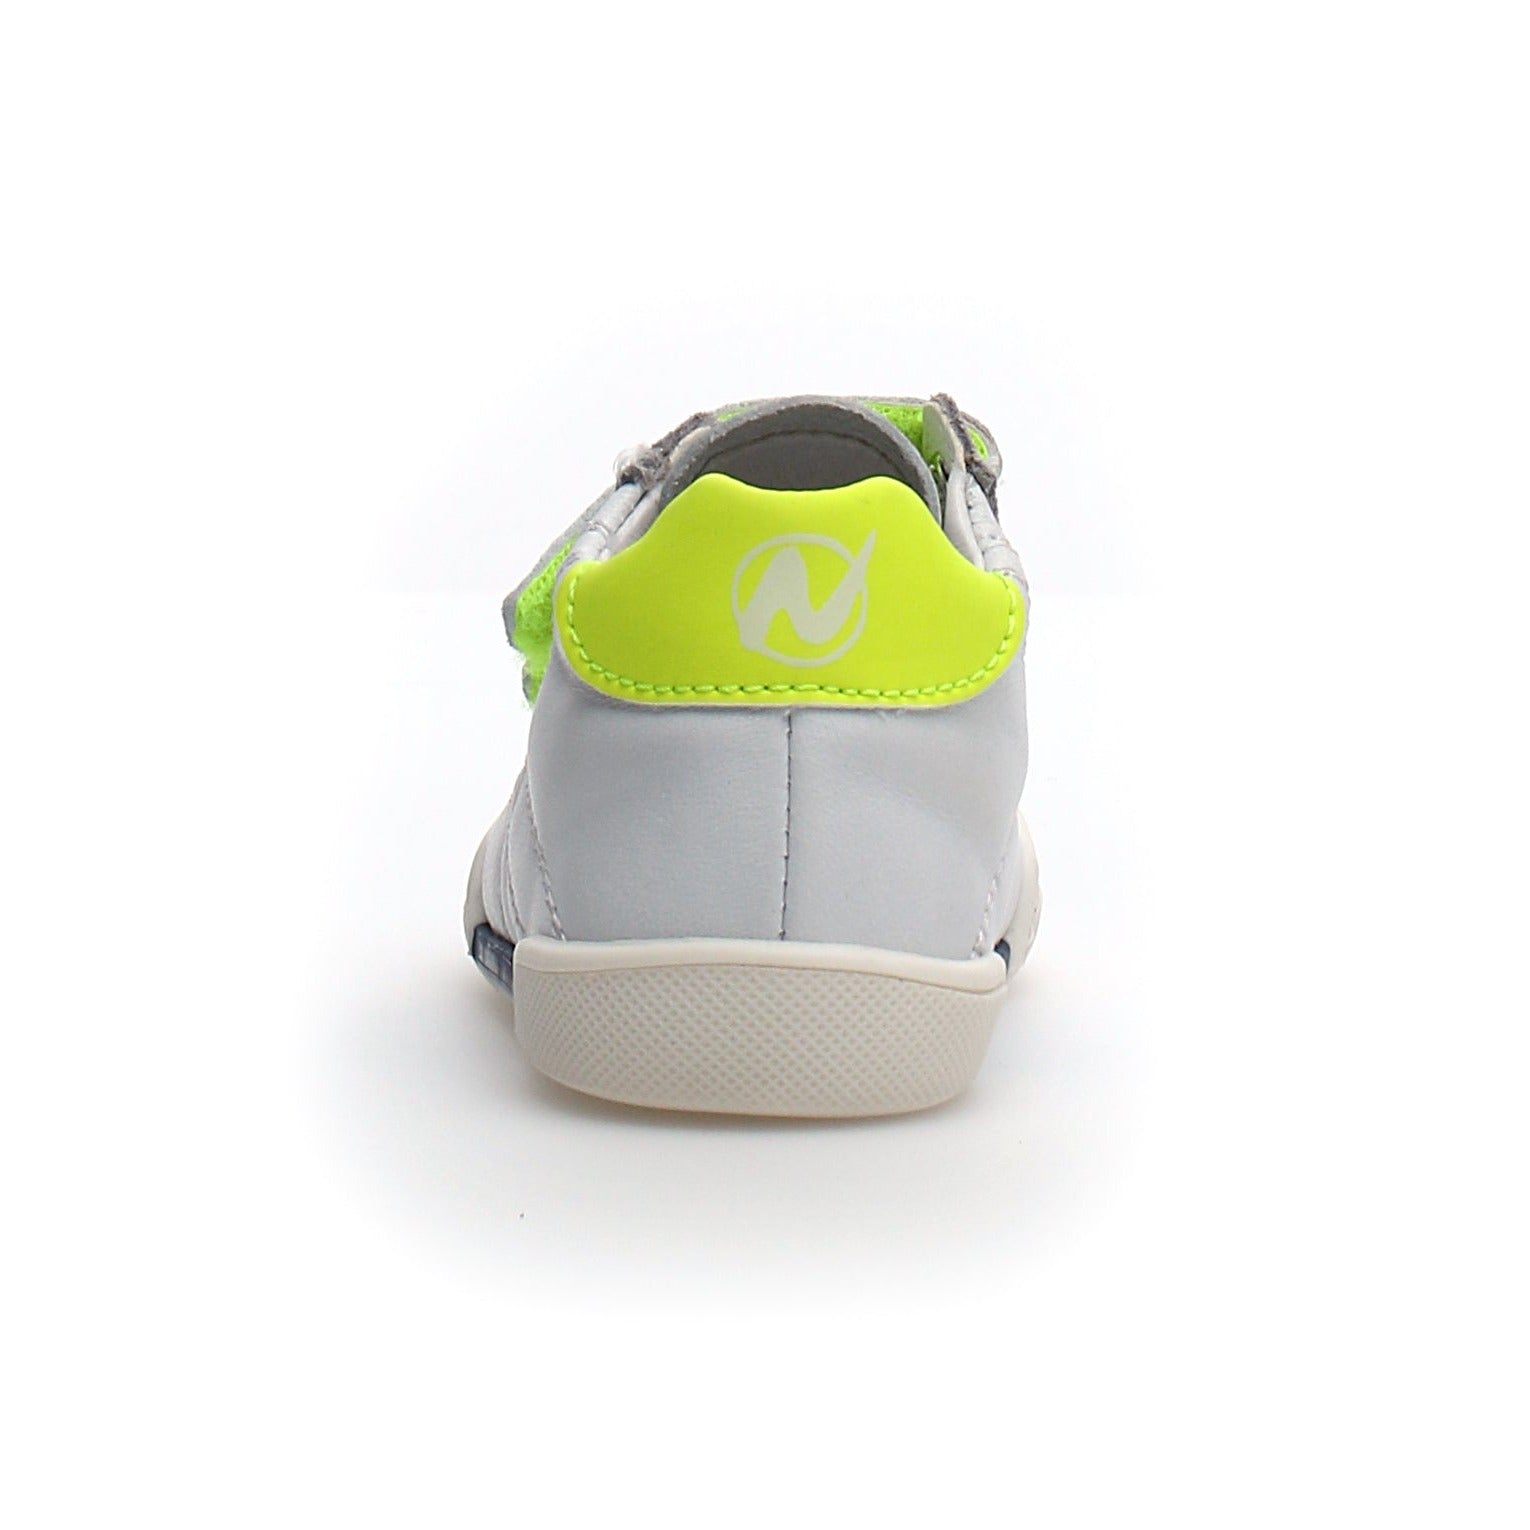 Naturino Girl's and Boy's Mimos Fashion Sneakers - White/Grey